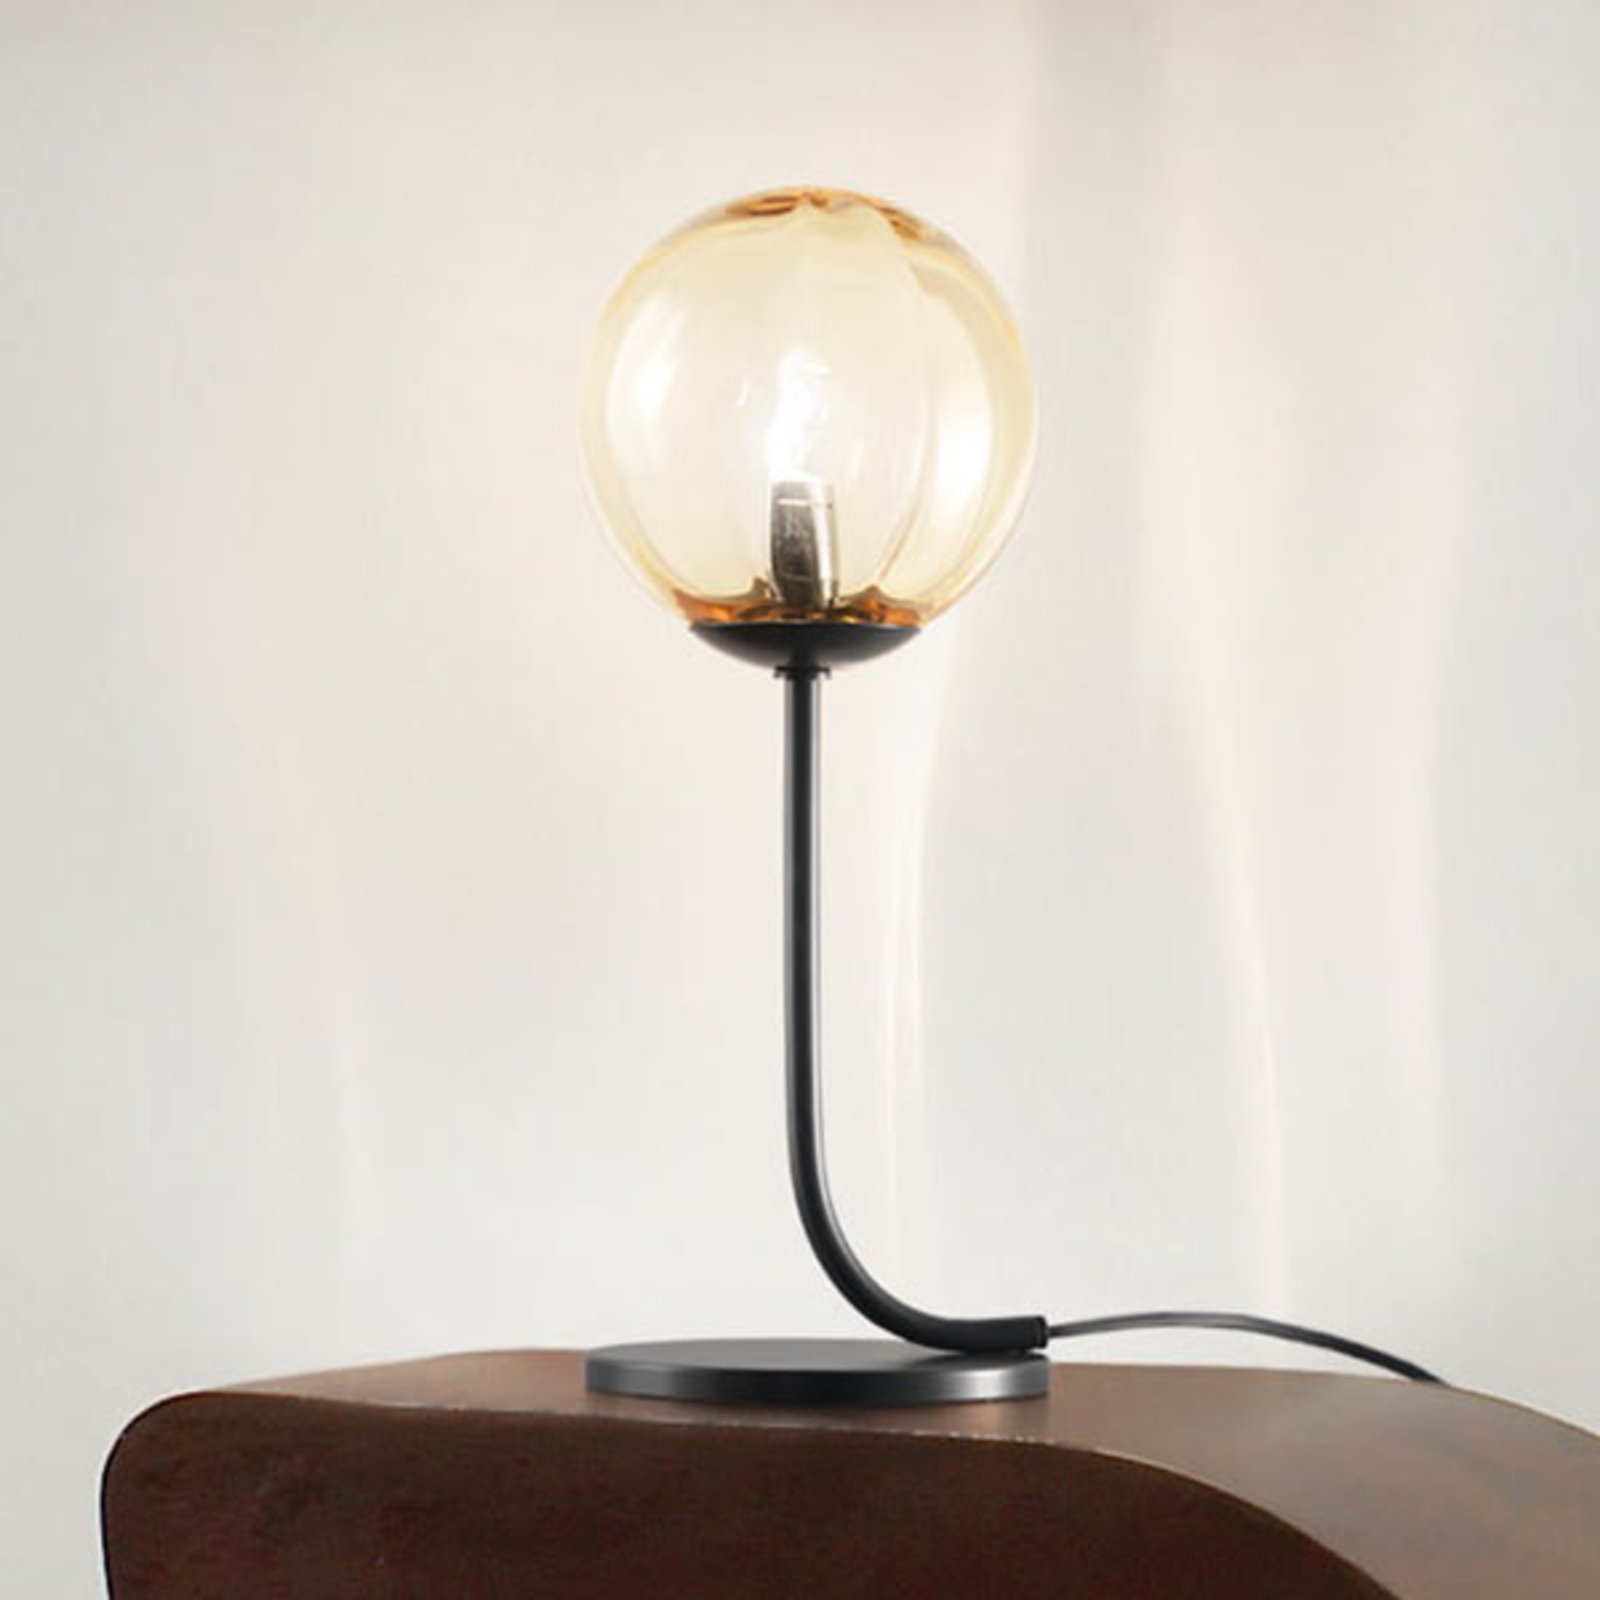 Designer tafellamp Puppet van Muranoglas